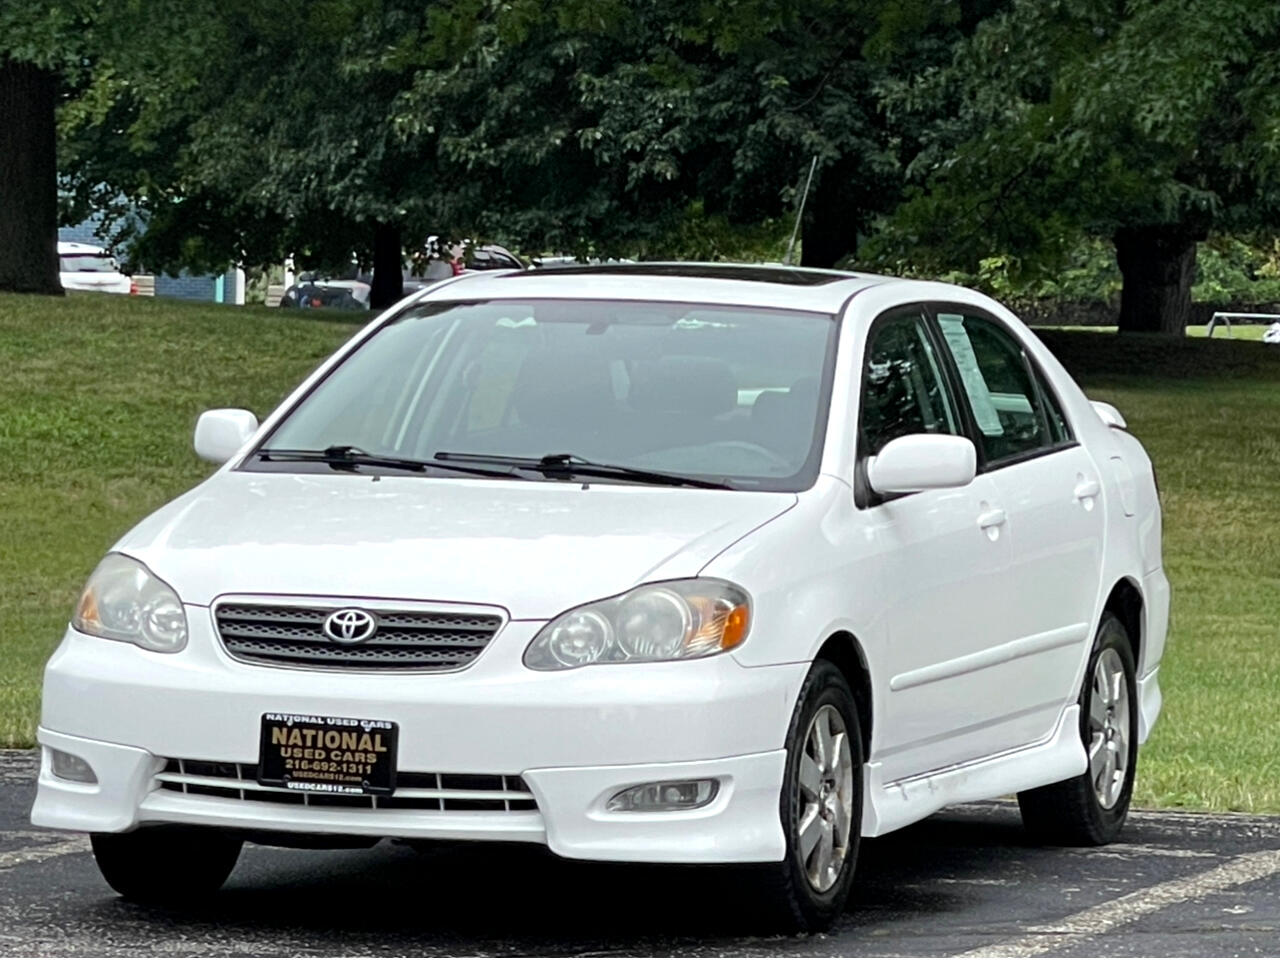 Toyota Corolla S 2007